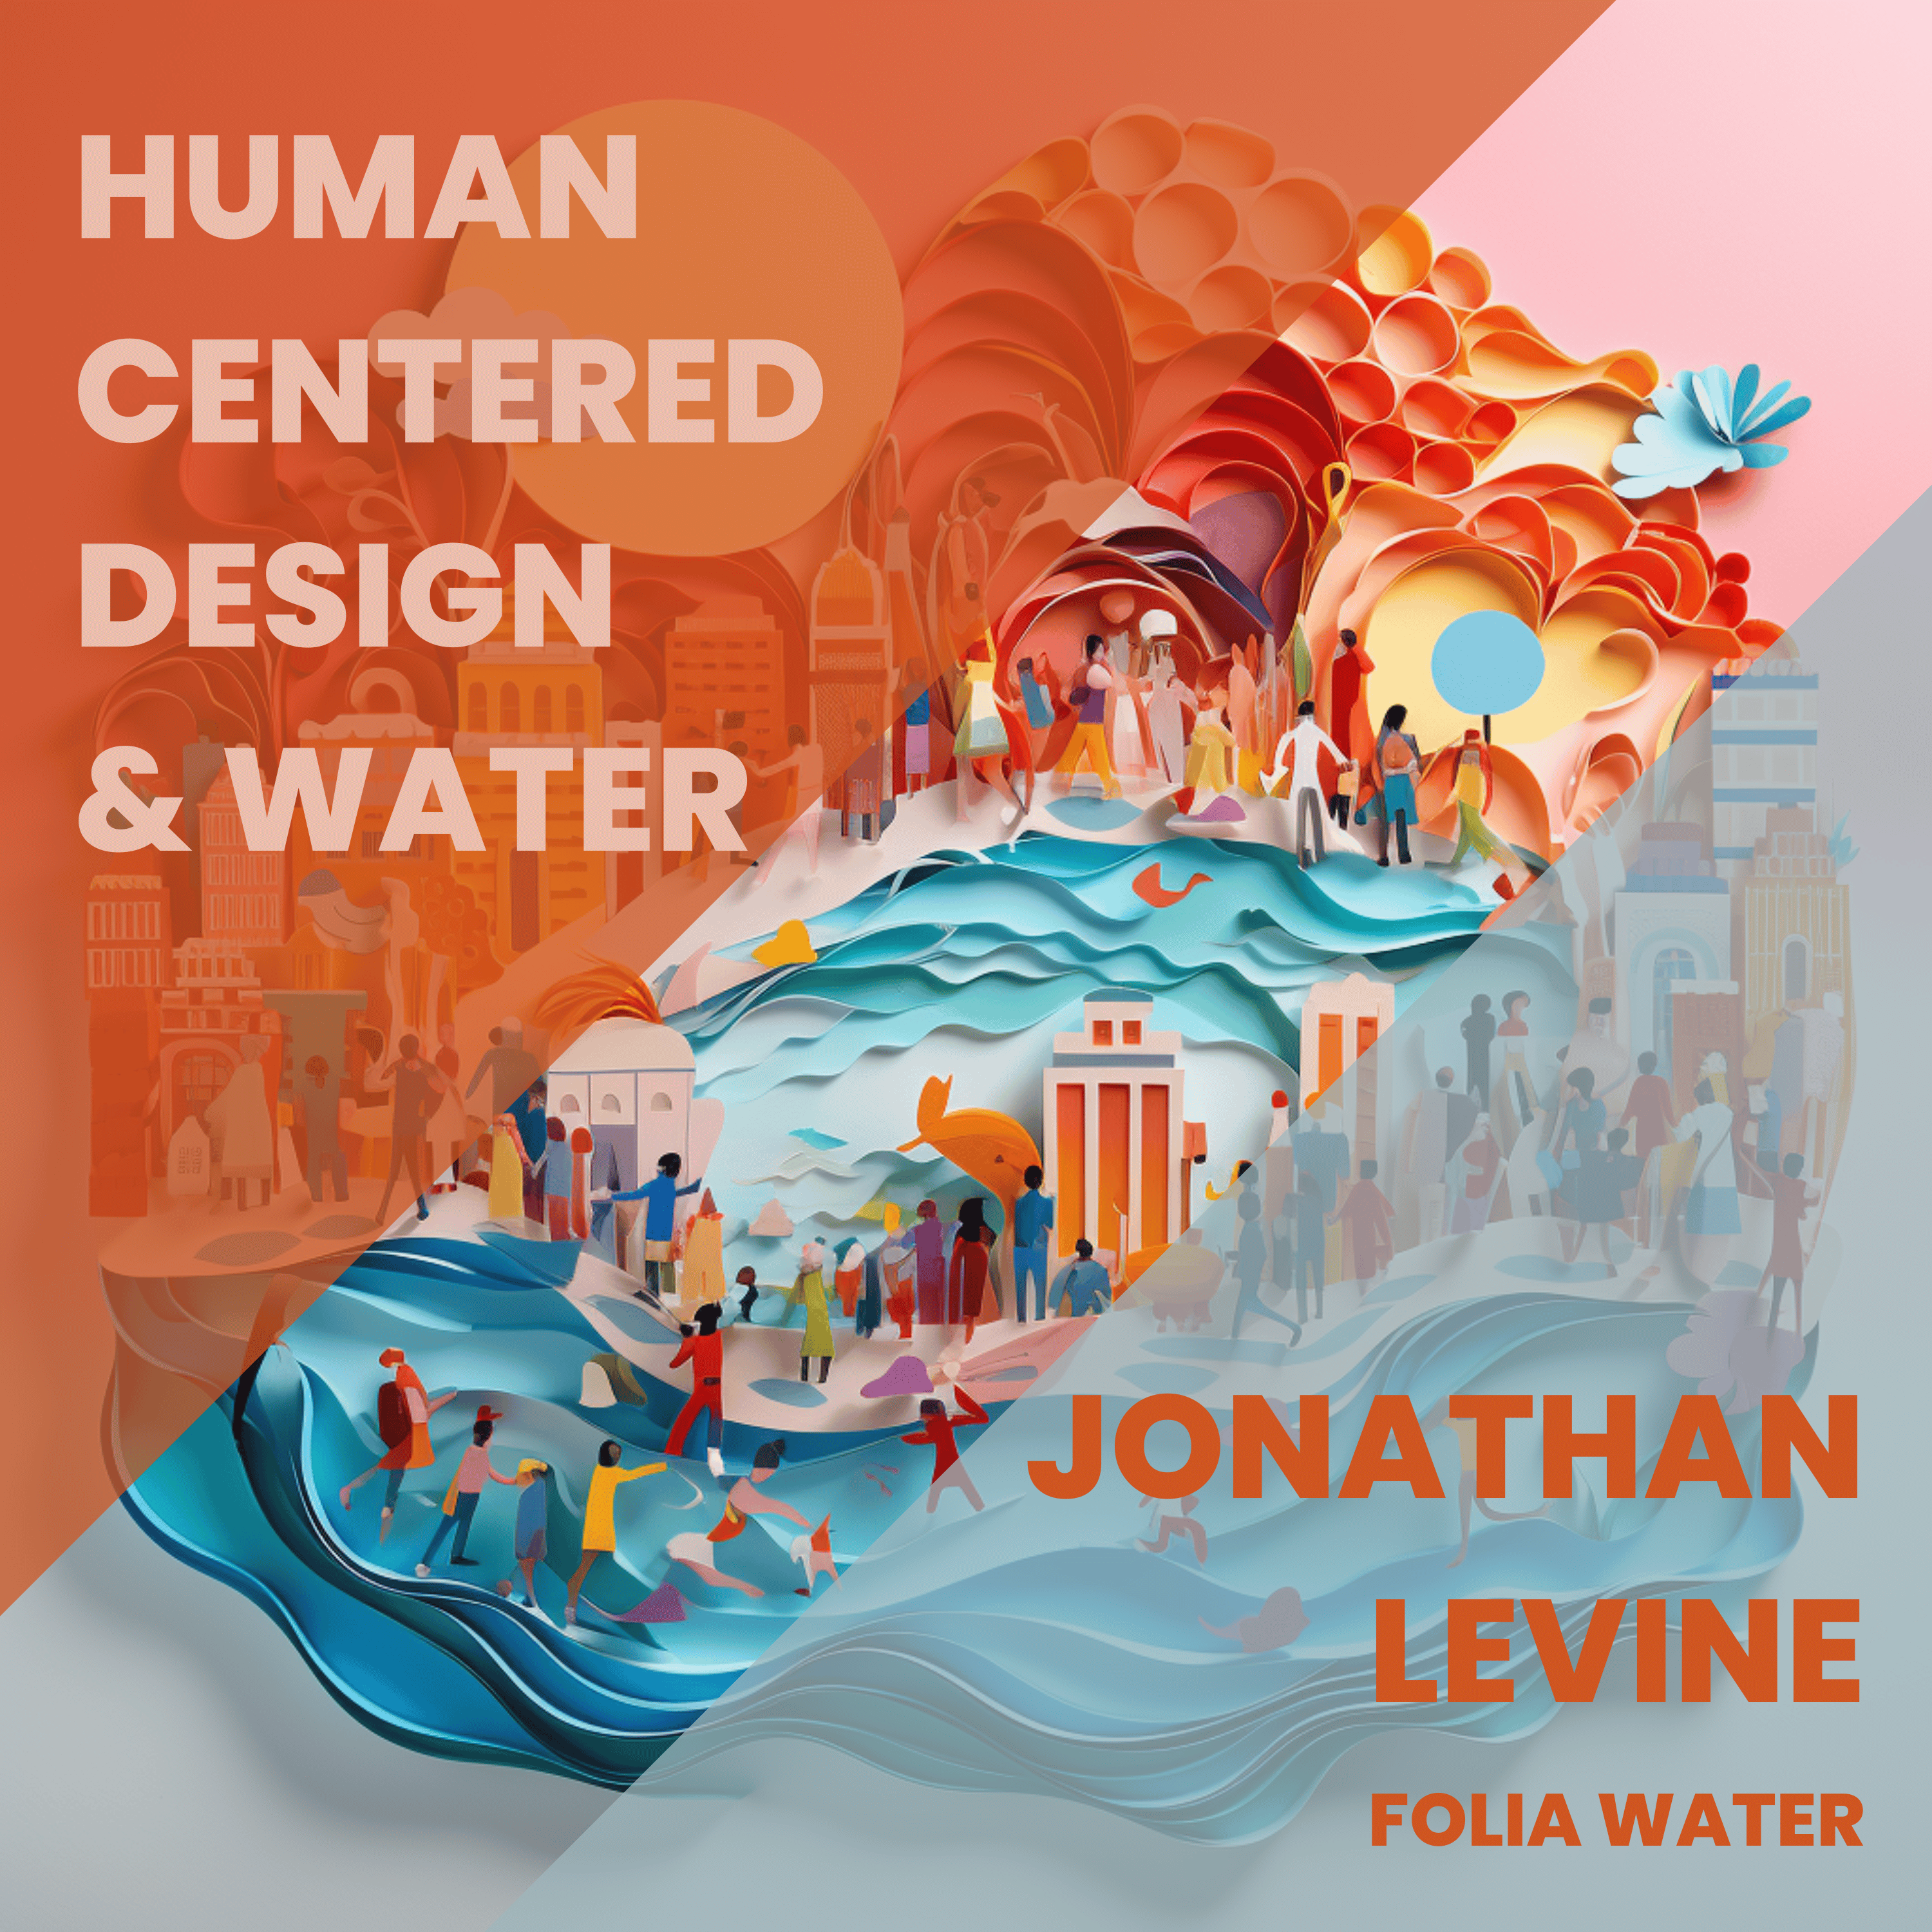 Human-Centered Design & Water